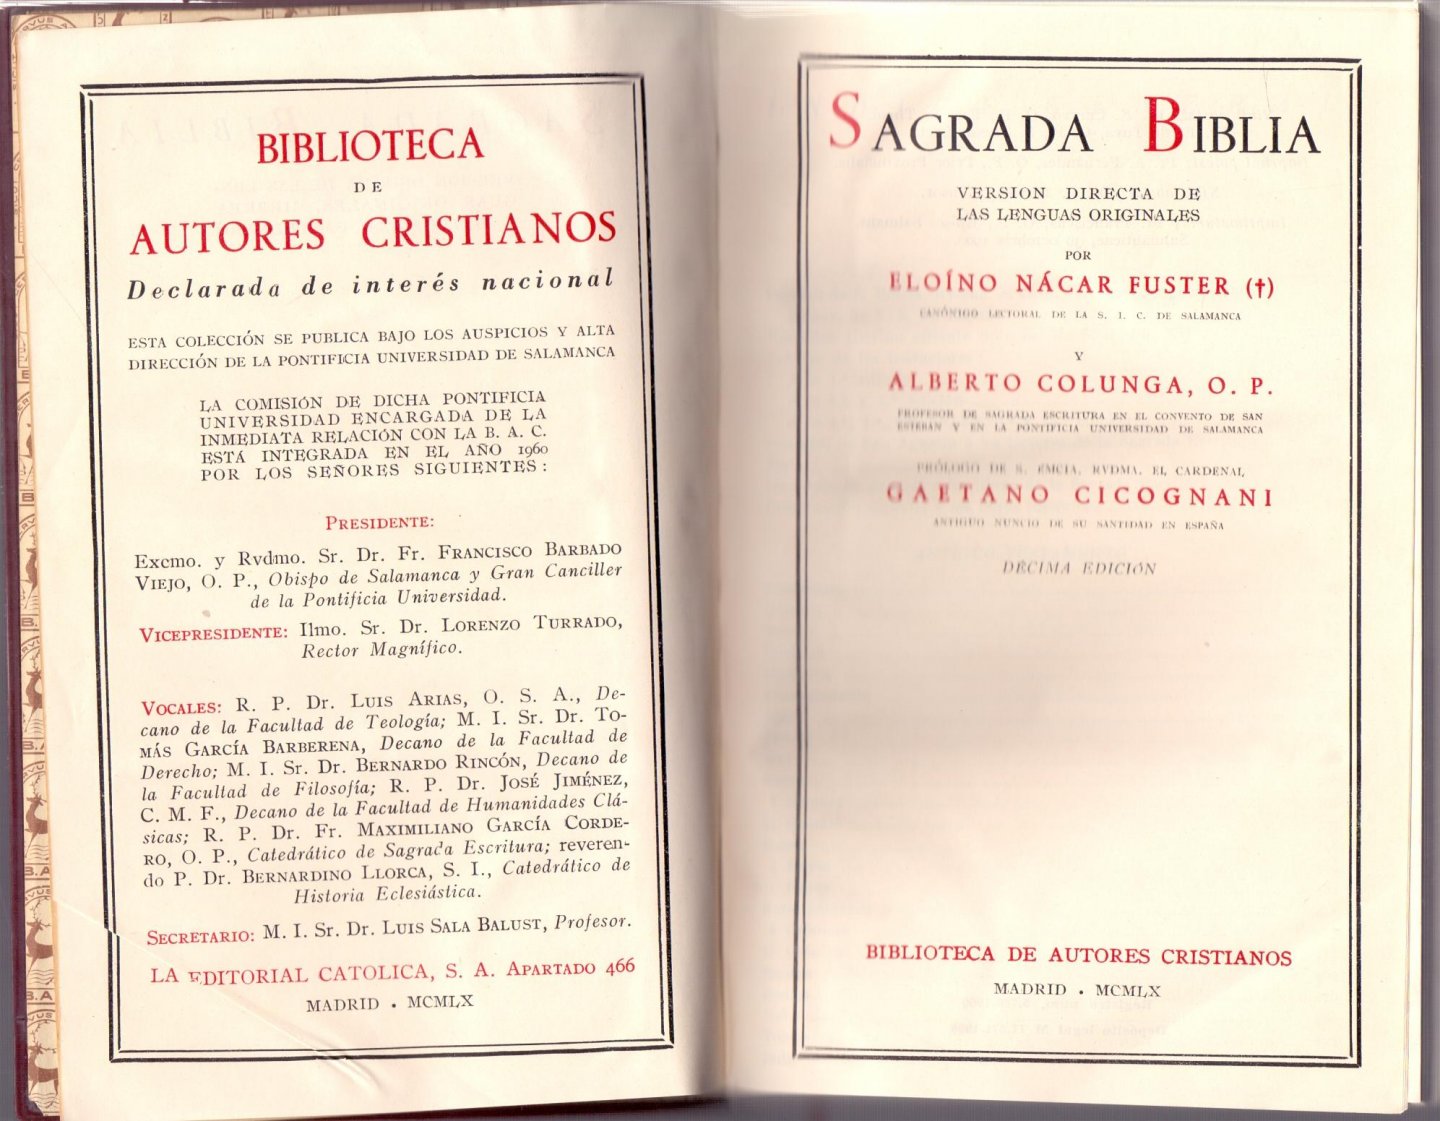 Fuster, Eloino Nácar , Colunga, Alberte O.P. , Gaetano Cicognani (ds1354) - Sagrada Biblia